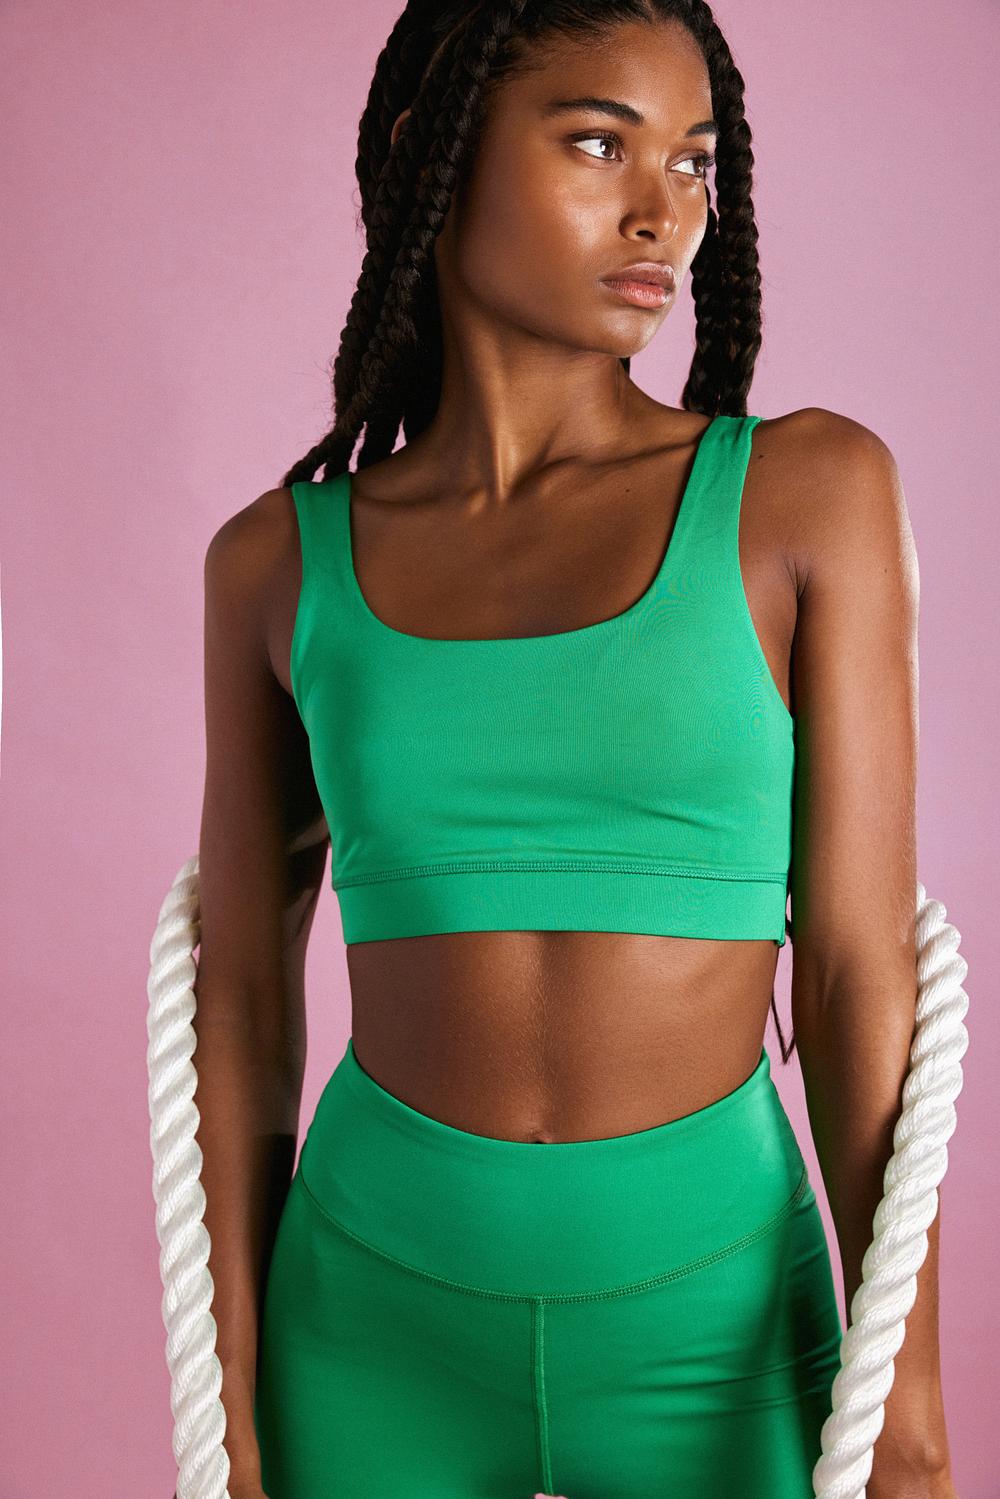 Green sports bra